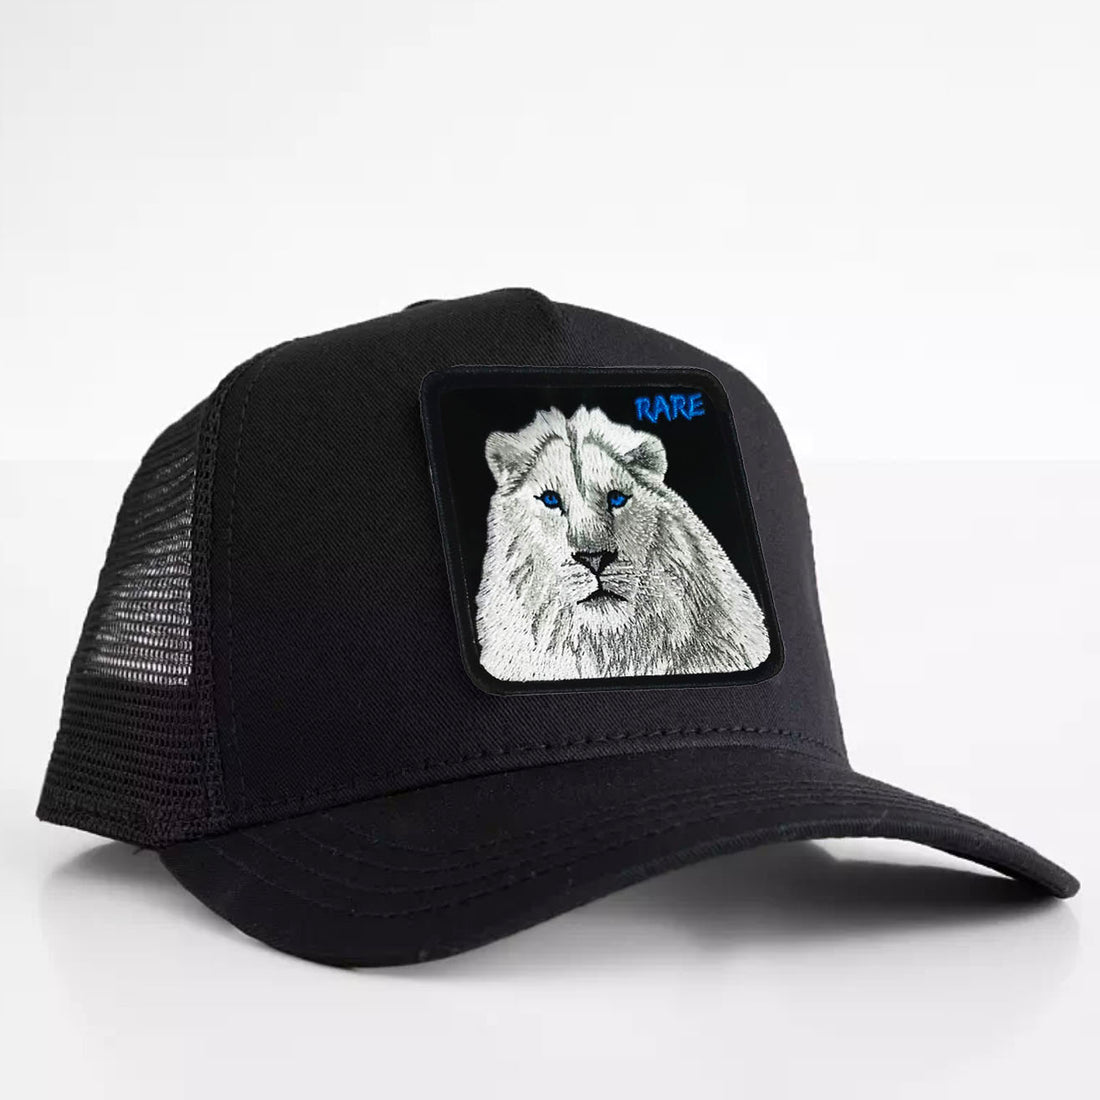 White Lion - "Rare" Trucker Hat